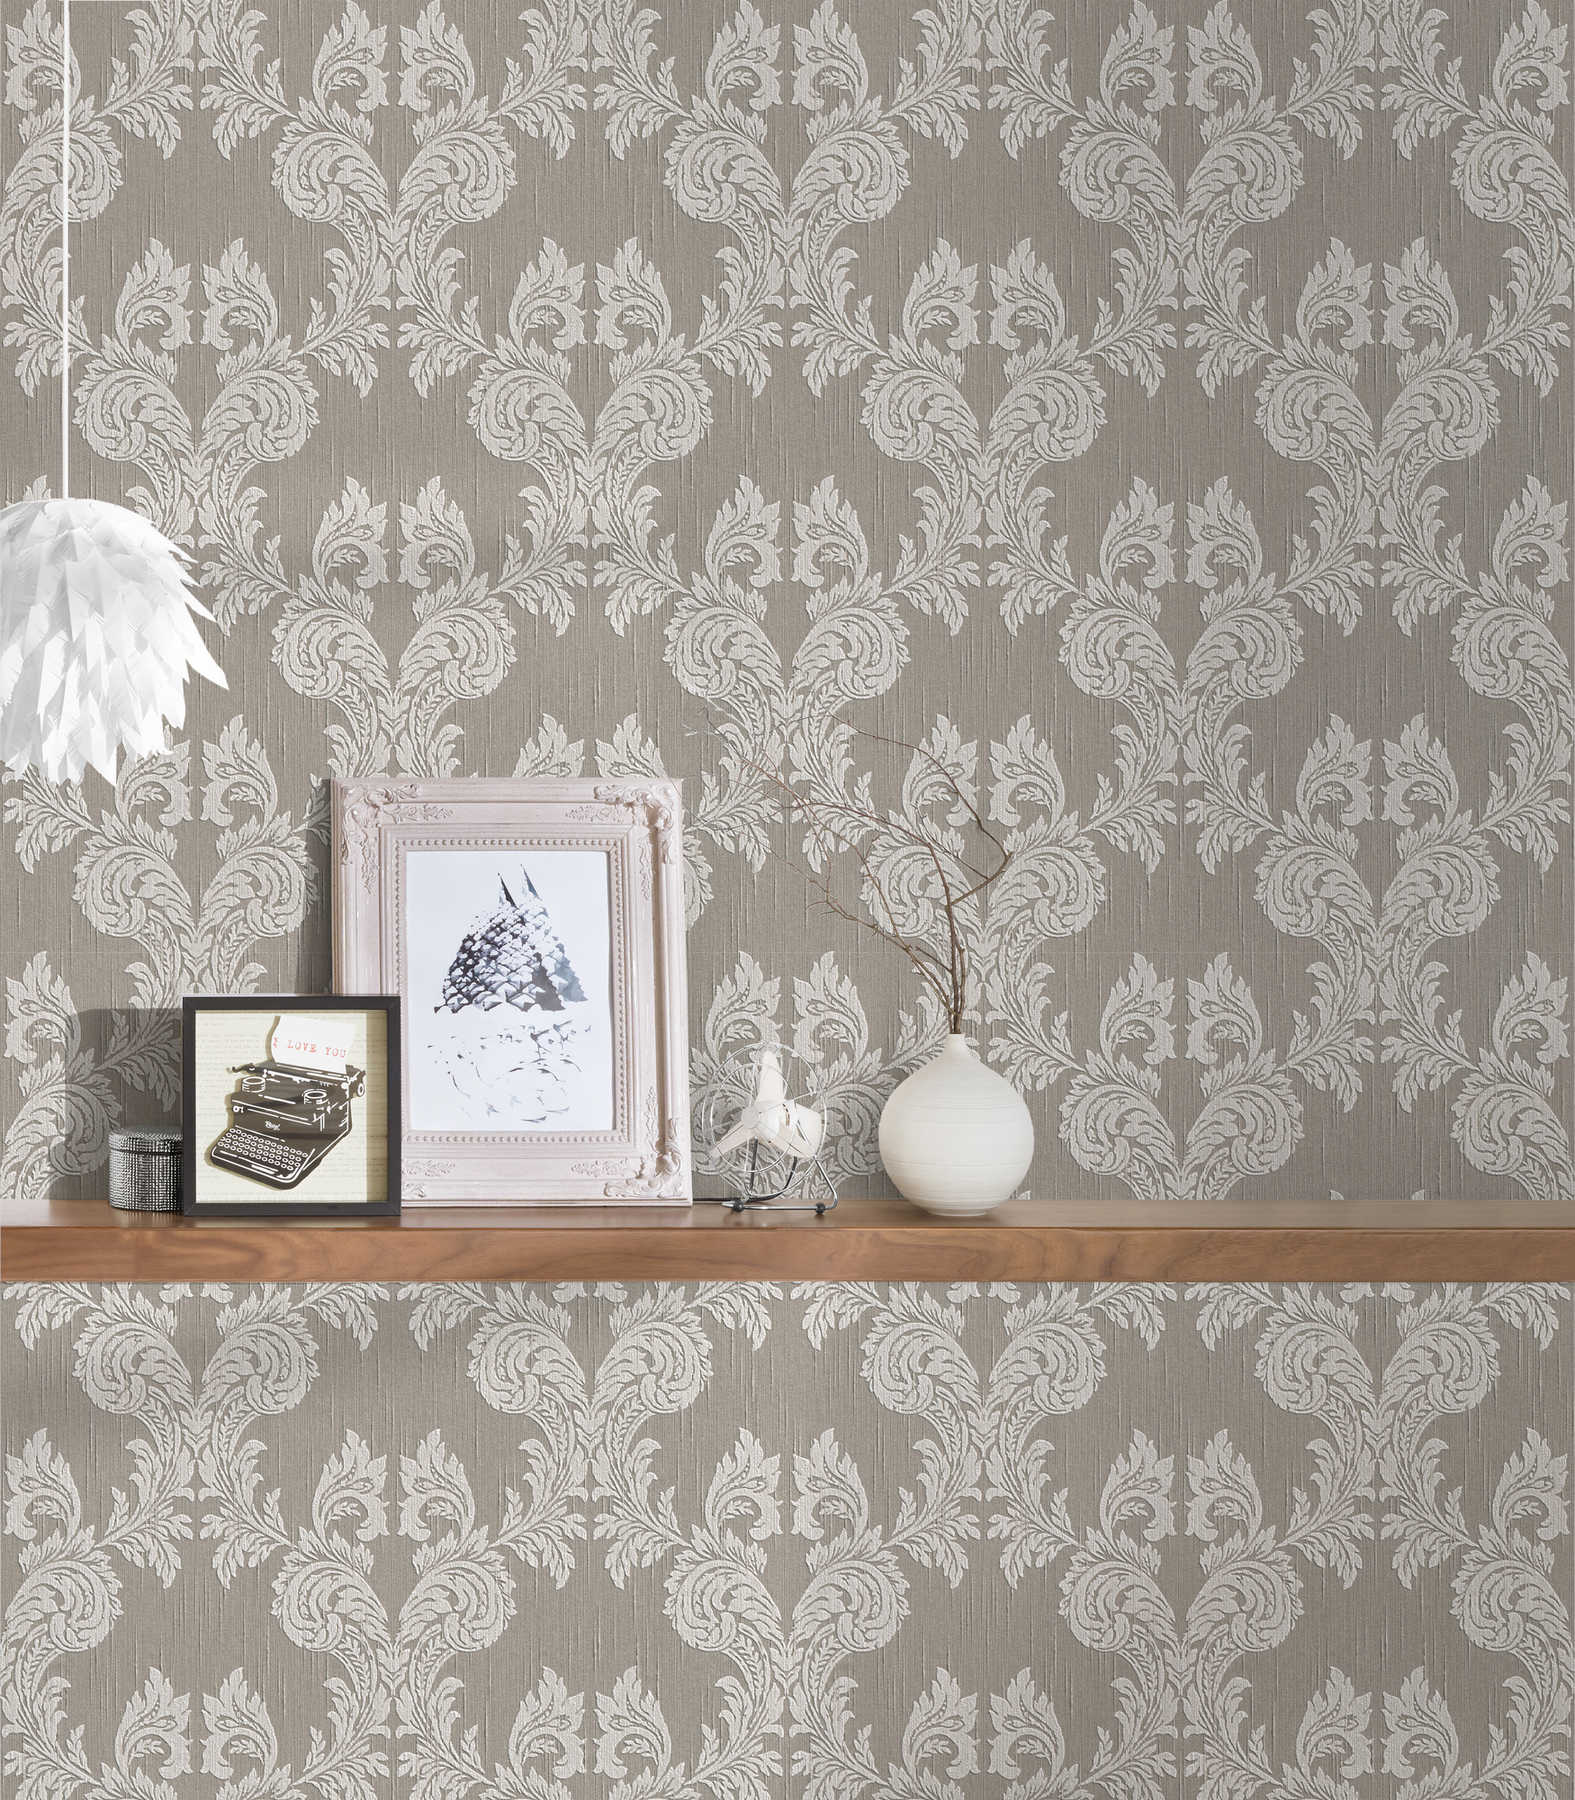             Tapete Barock Ornamente & Textildesign – Beige, Grau
        